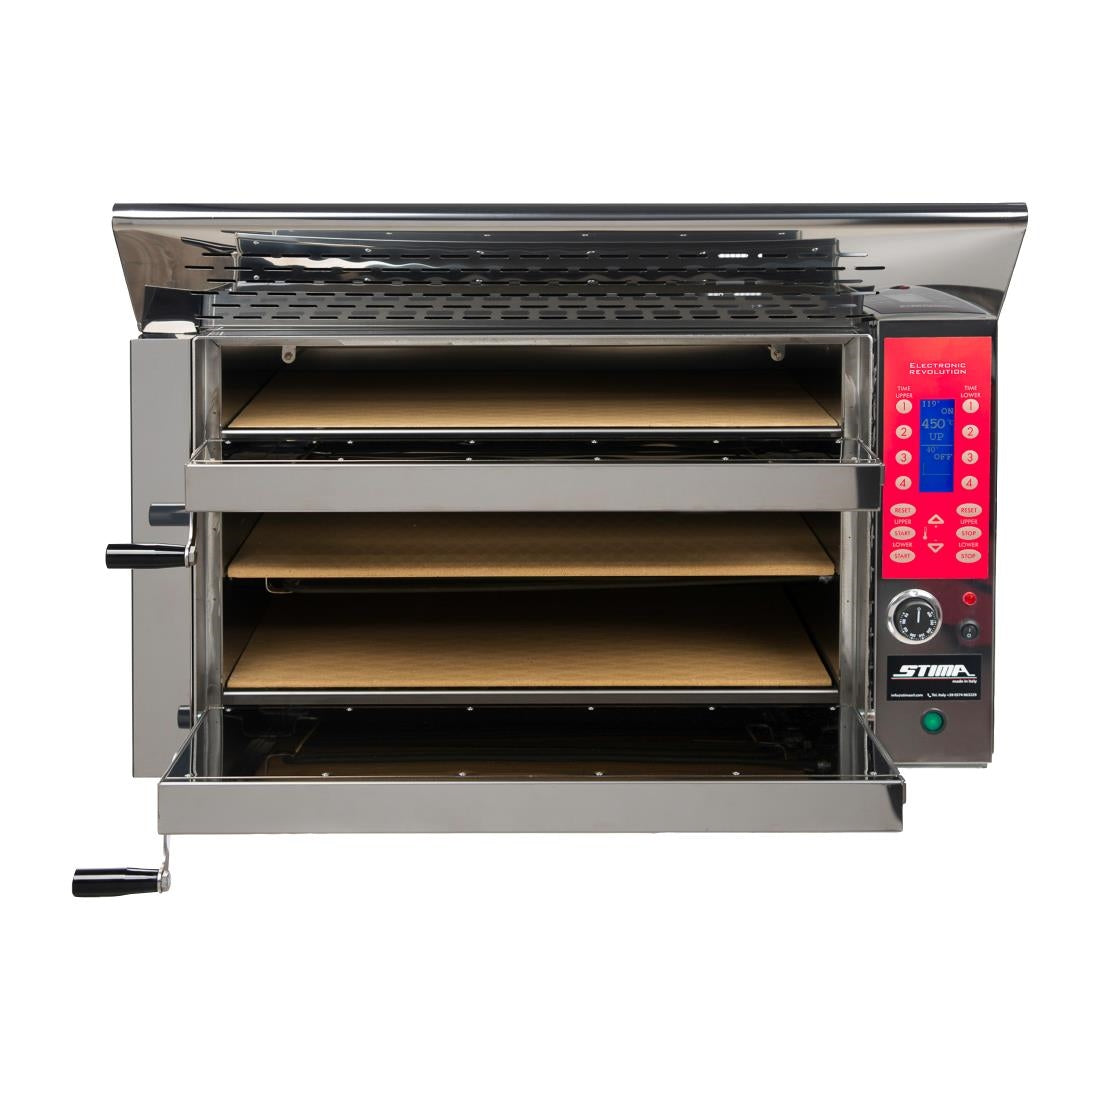 CU078 Stima VP3XL Fast Cook Pizza Oven JD Catering Equipment Solutions Ltd